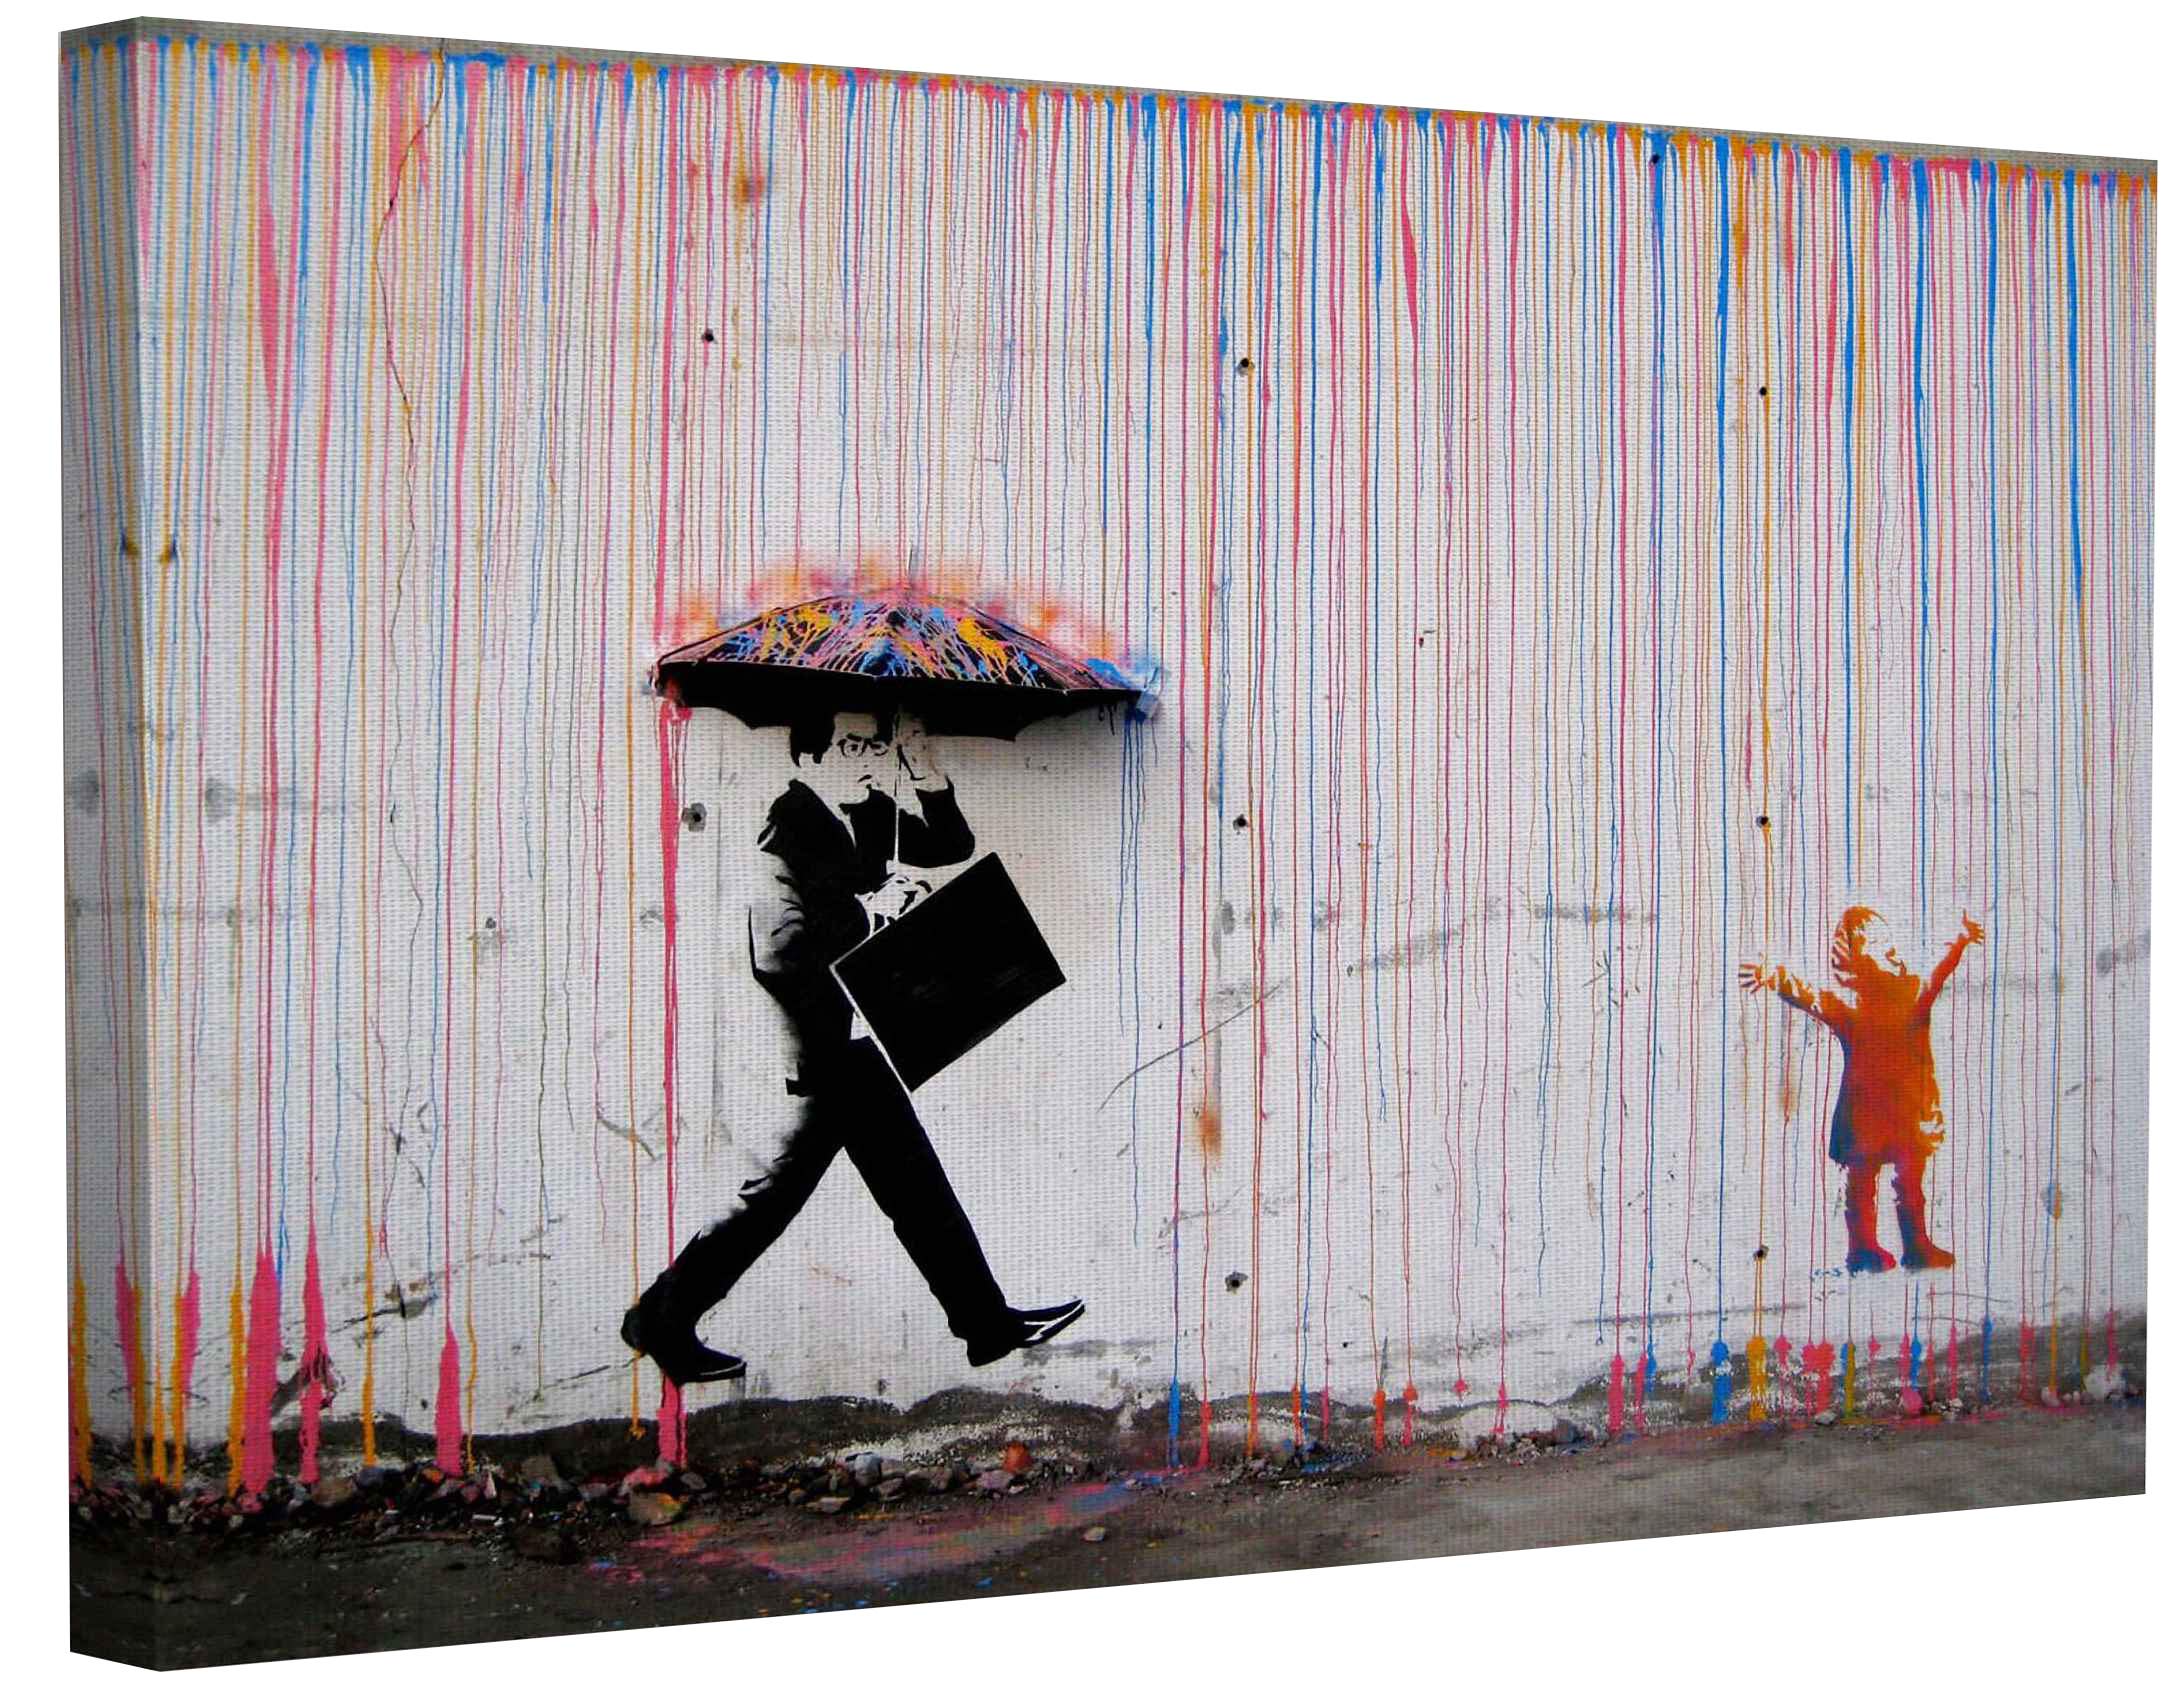 MJEDC Banksy Bilder Leinwand Kid Playing in Colorful Rain Graffiti Street Art Leinwandbild Fertig Auf Keilrahmen Kunstdrucke Wohnzimmer Wanddekoration Deko XXL (50x70cm(19.7x27.6inch))